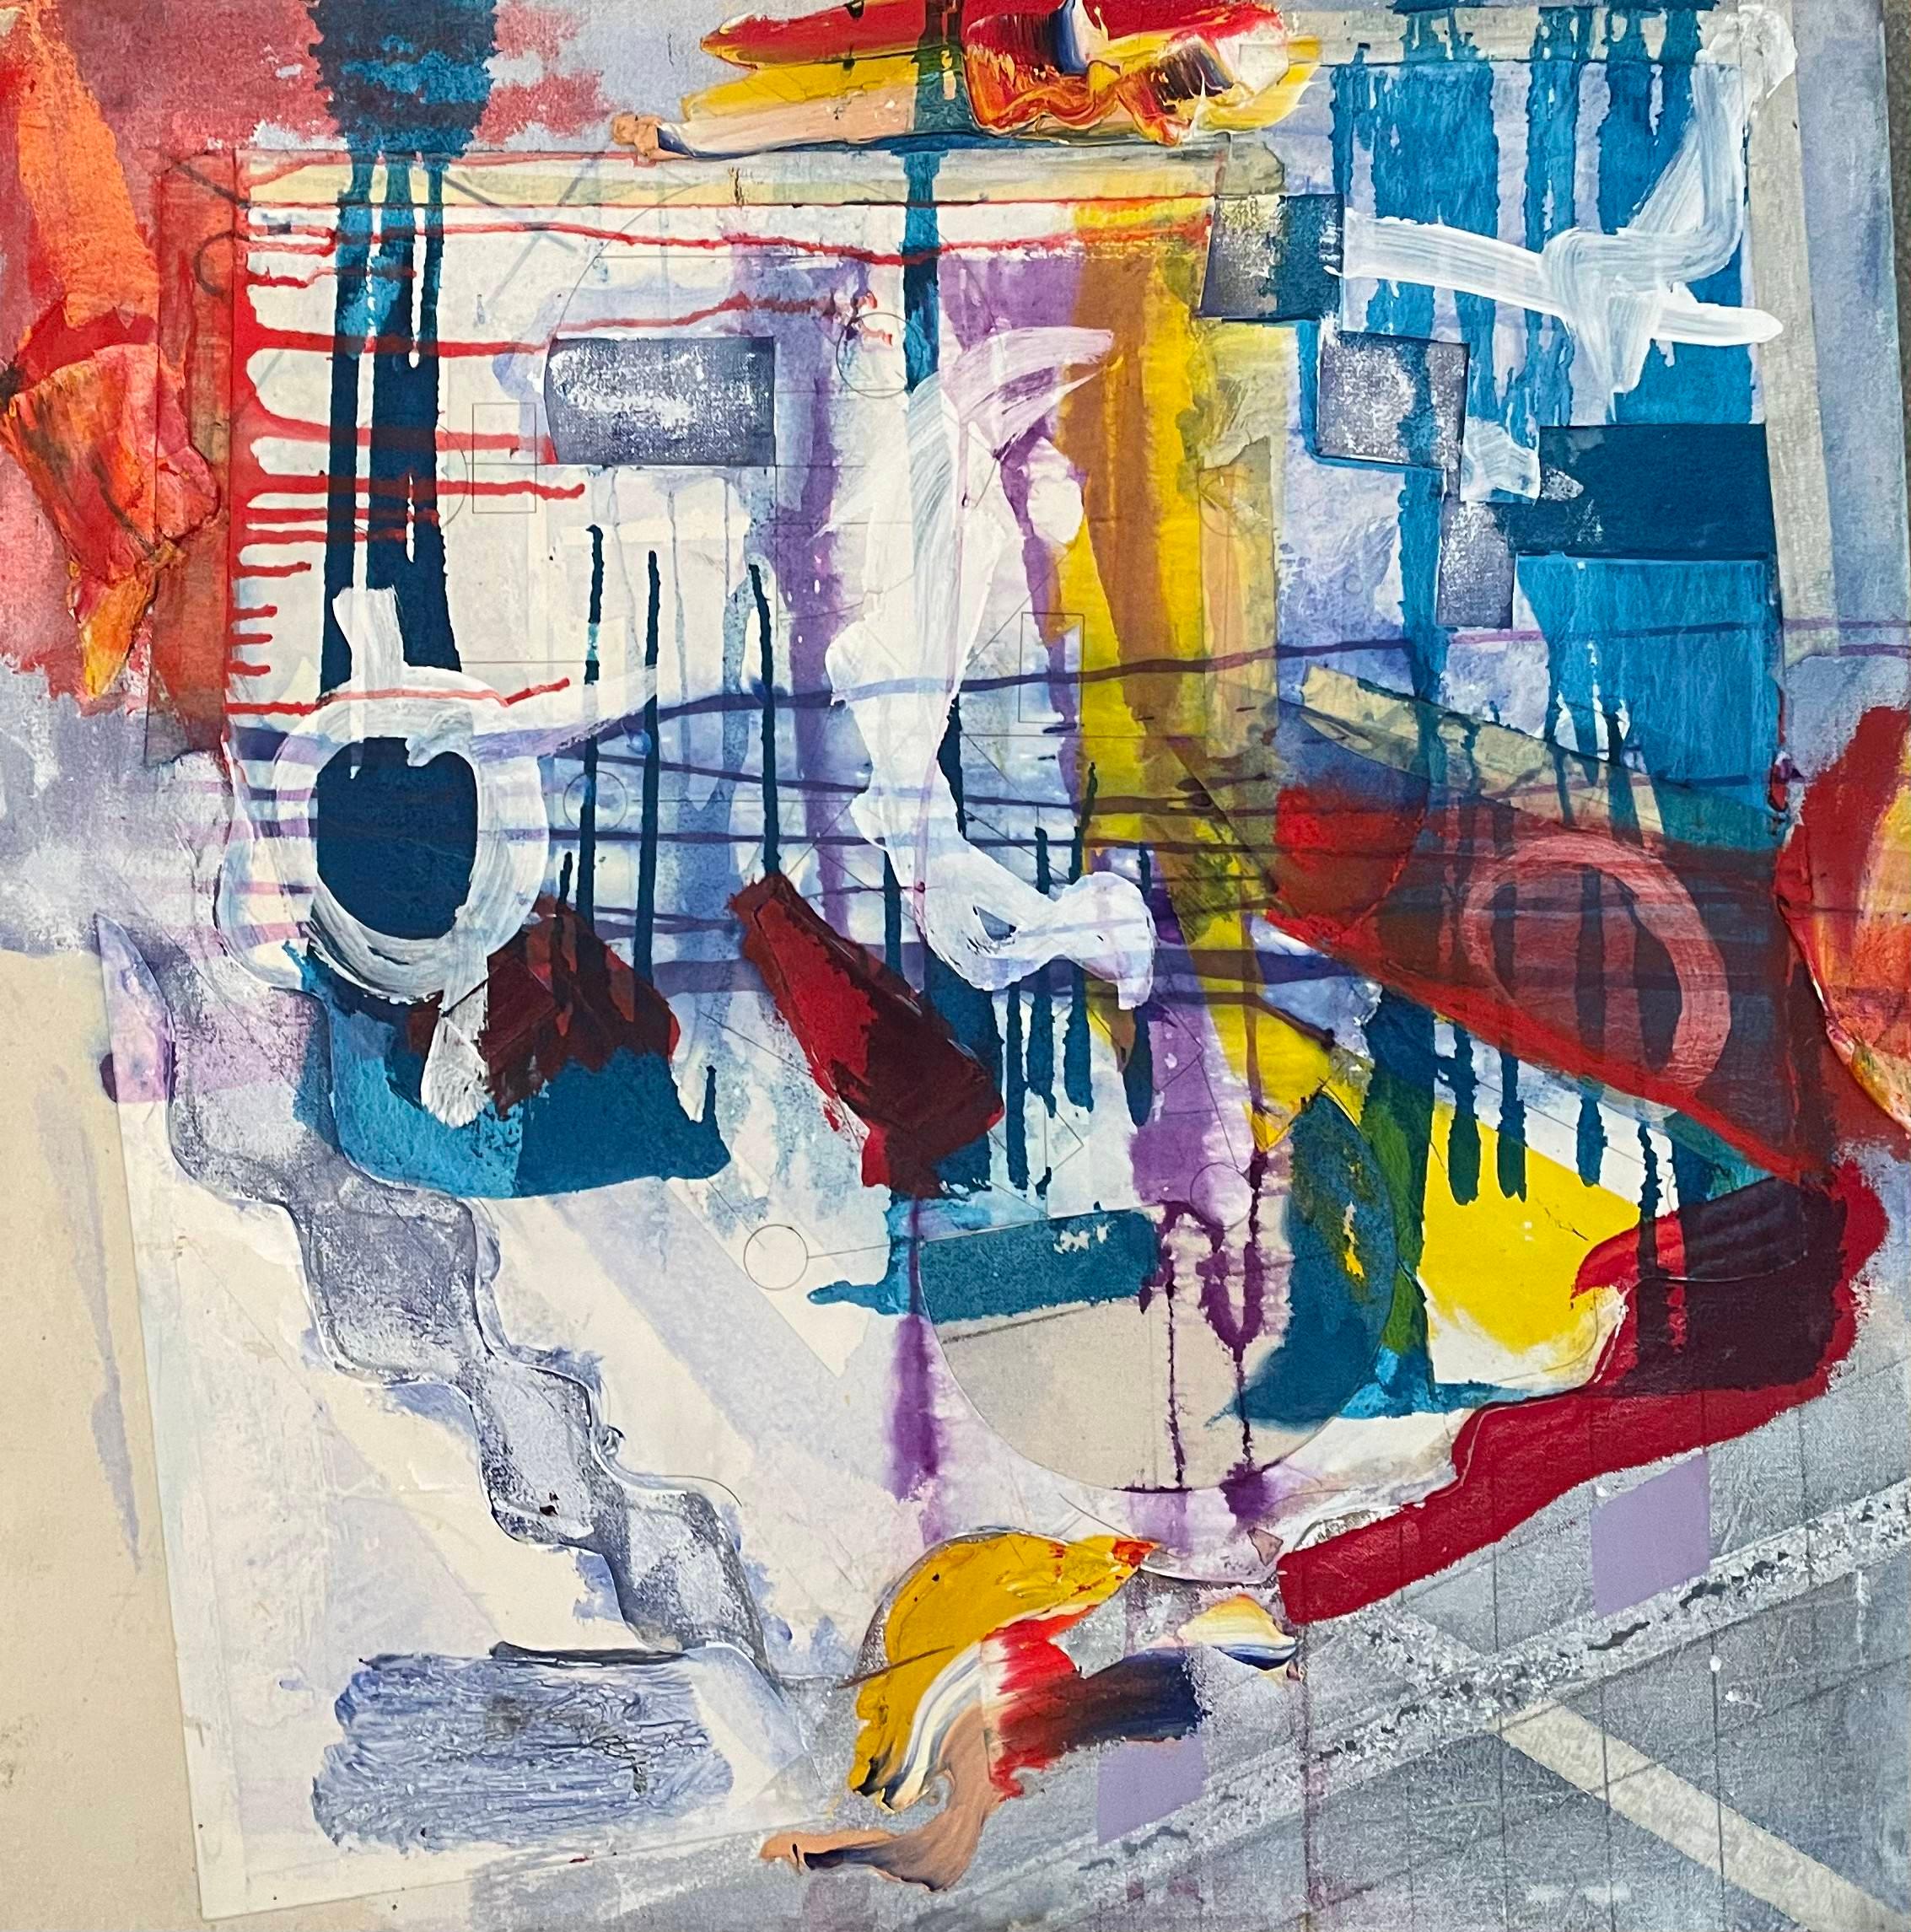 "Interplay" Petite œuvre colorée en Mixed Media Contemporary Abstract de Steven Rehfeld